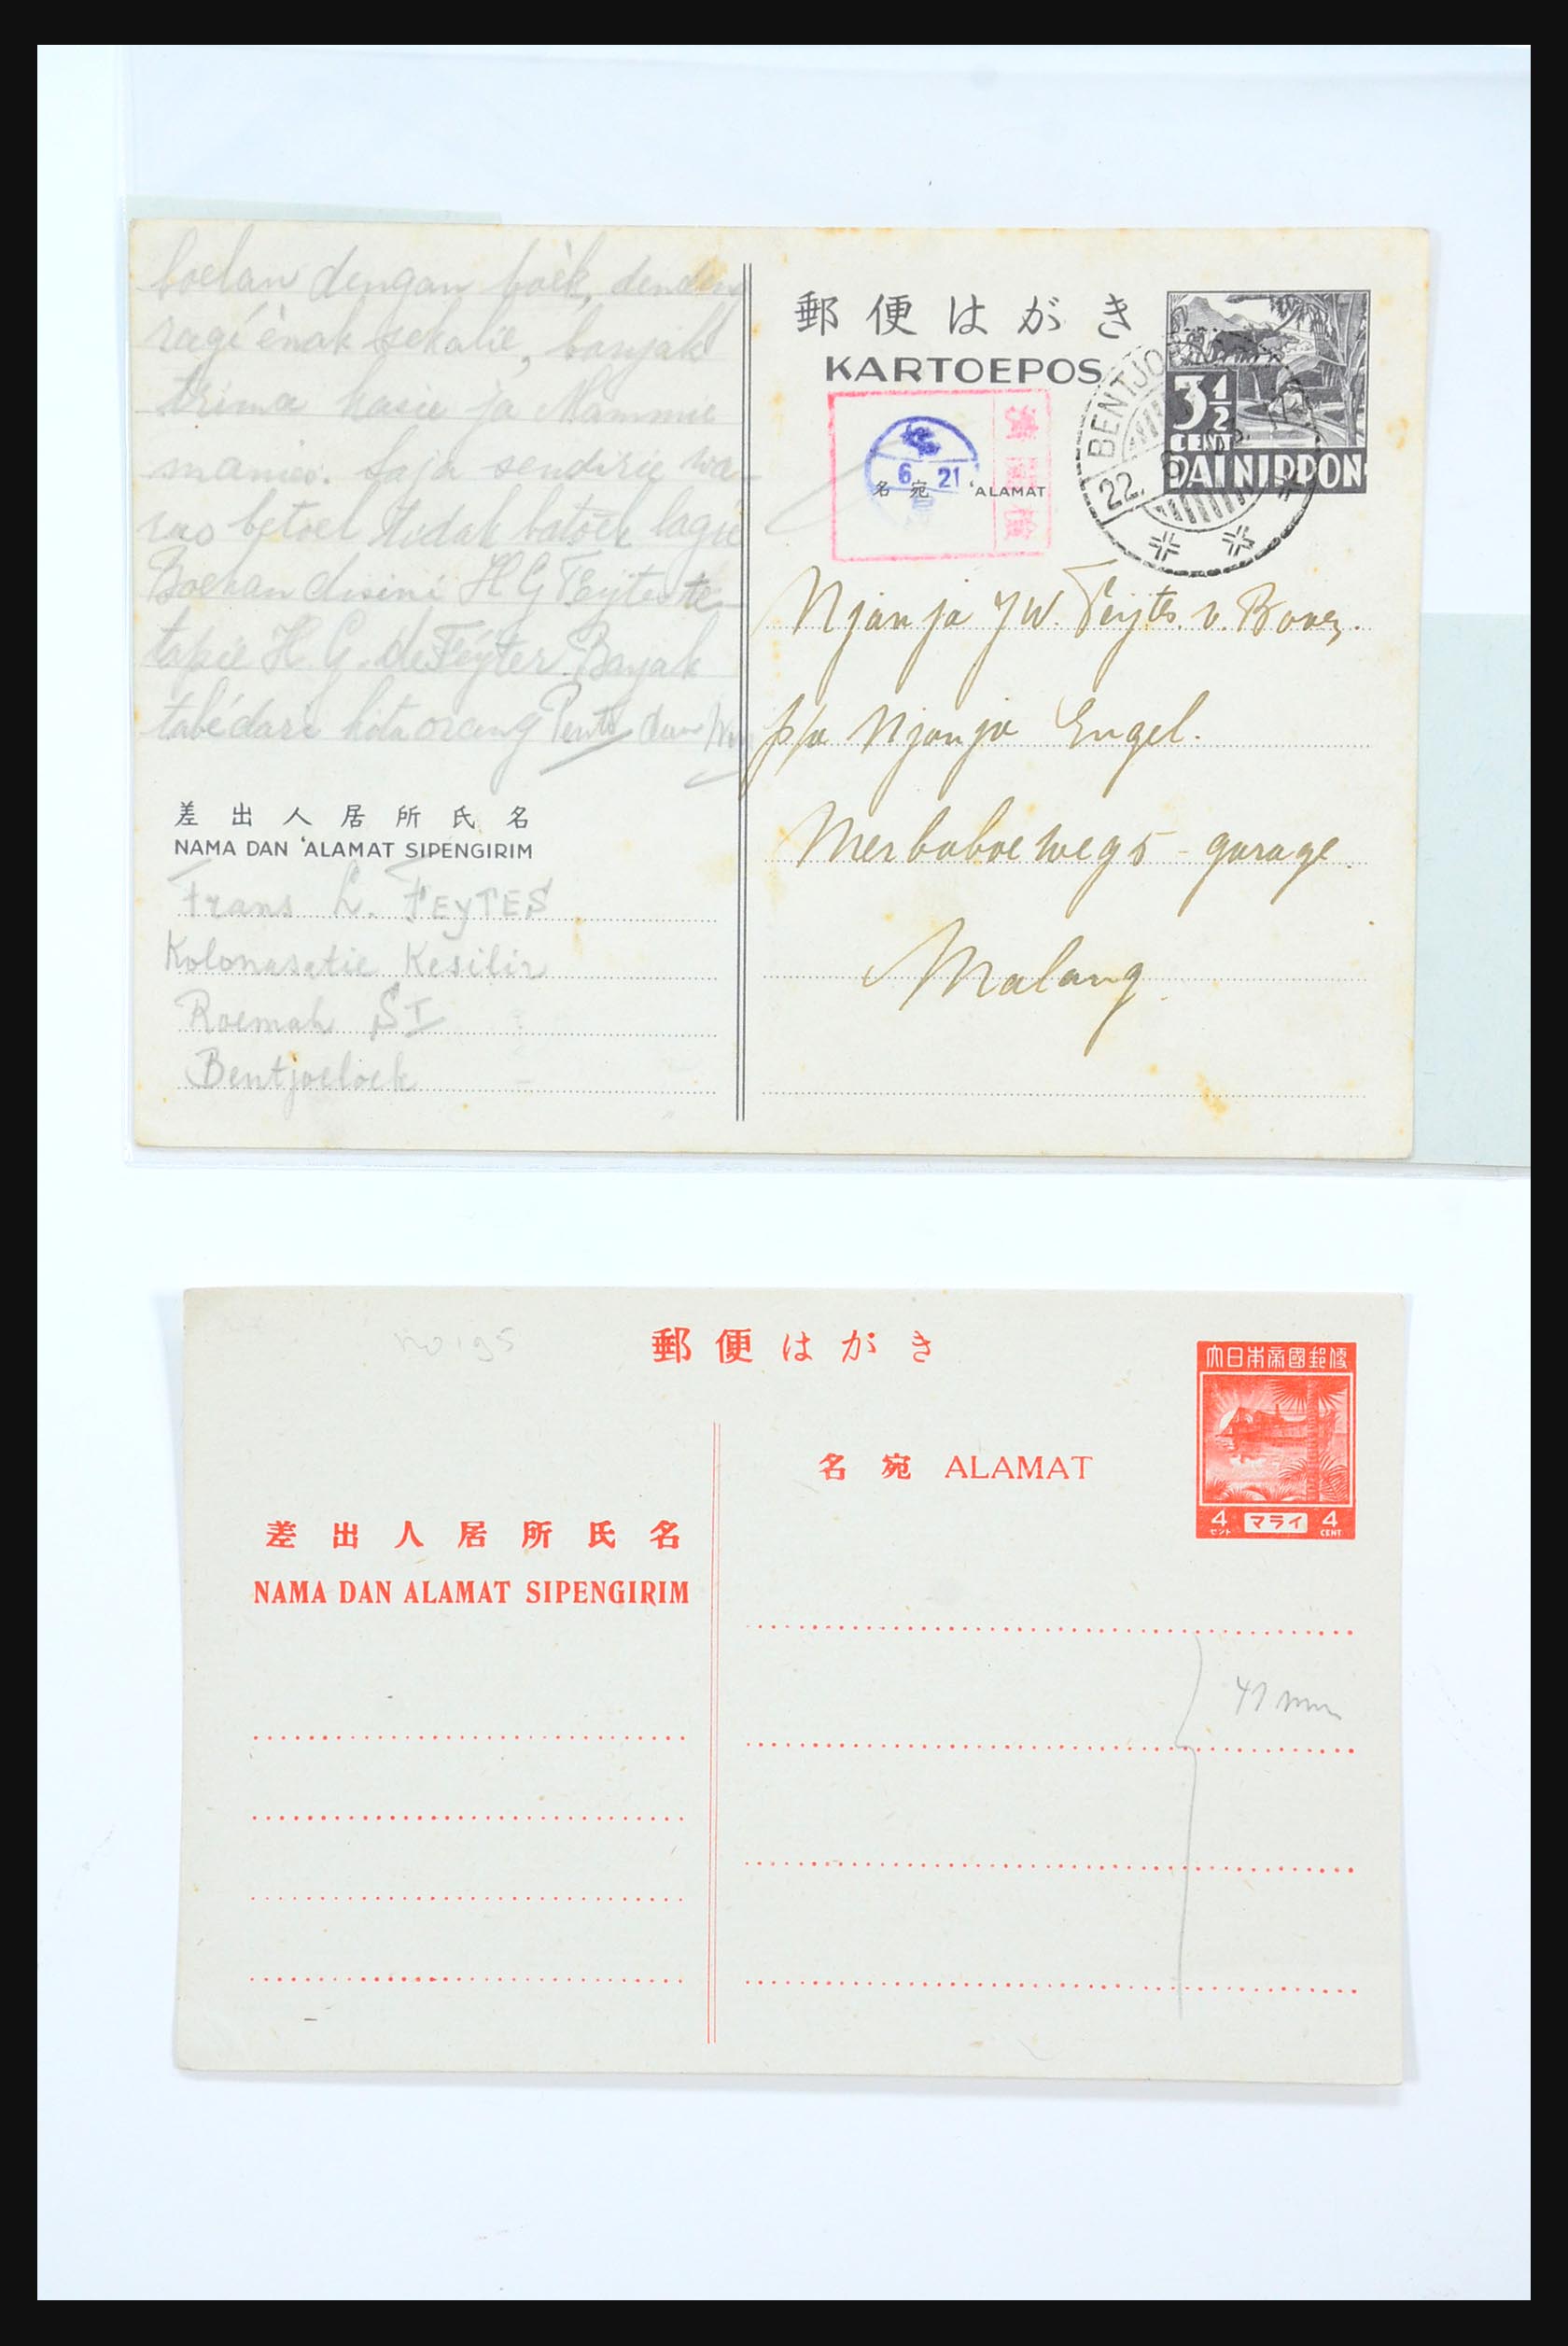 31362 120 - 31362 Nederlands Indië Japanse bezetting brieven 1942-1945.